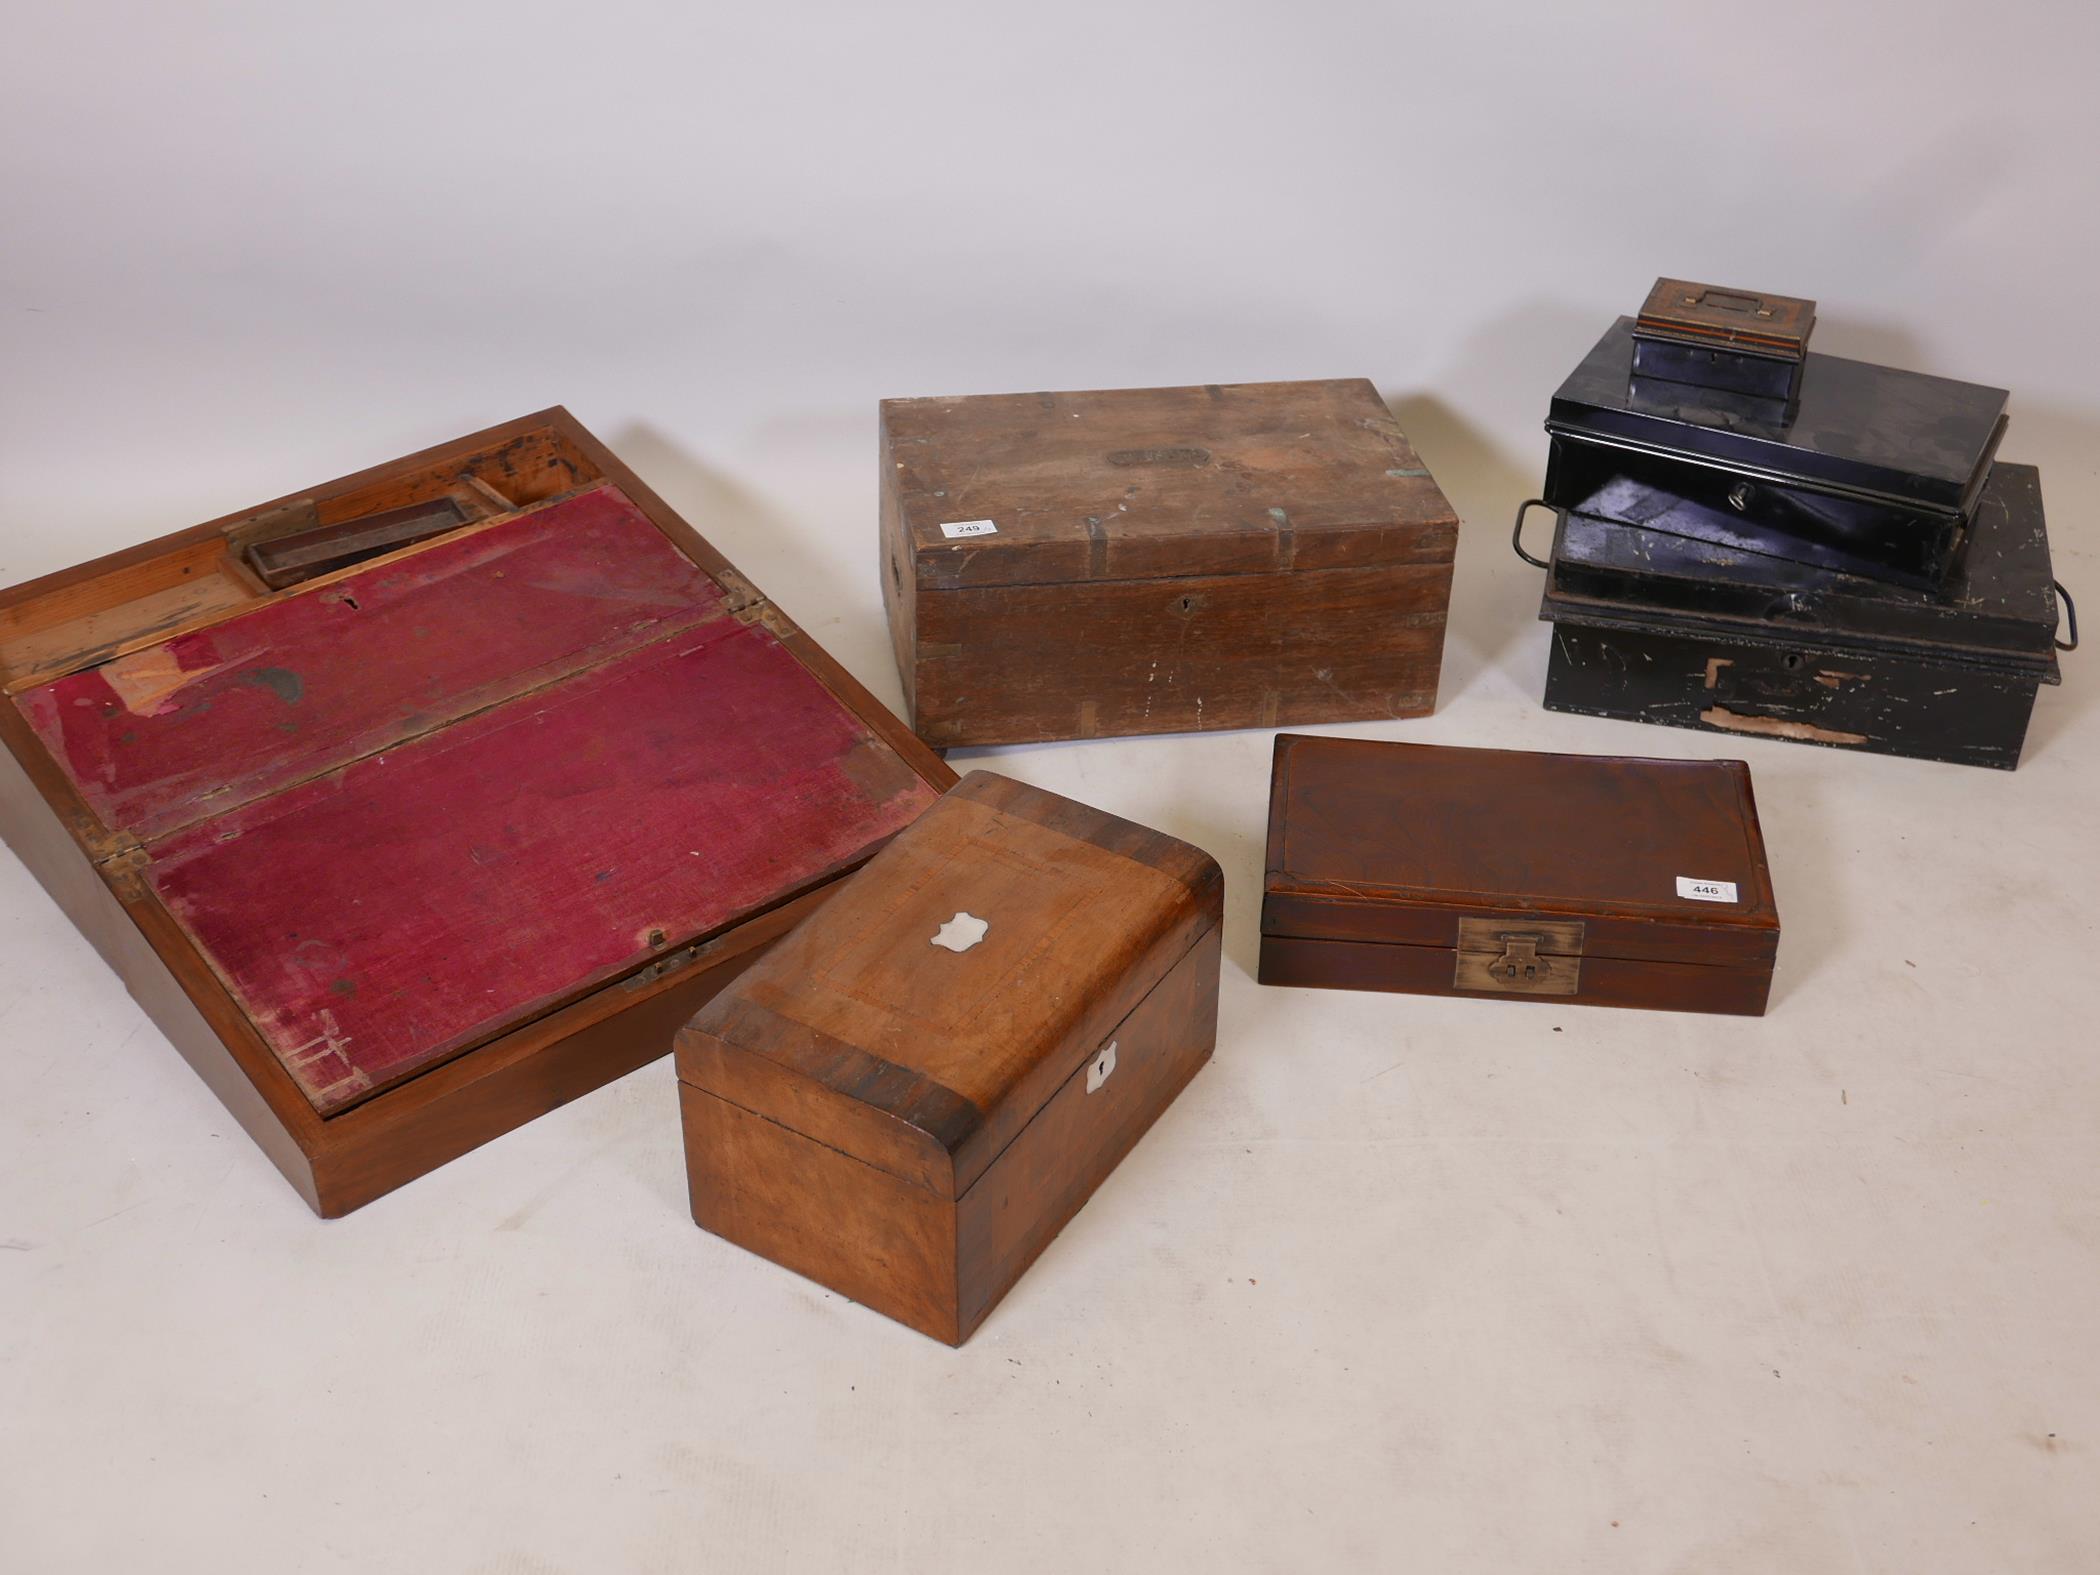 A Victorian mahogany writing slope, 12" x 21" x 8", an inlaid mahogany jewellery box, deed boxes,